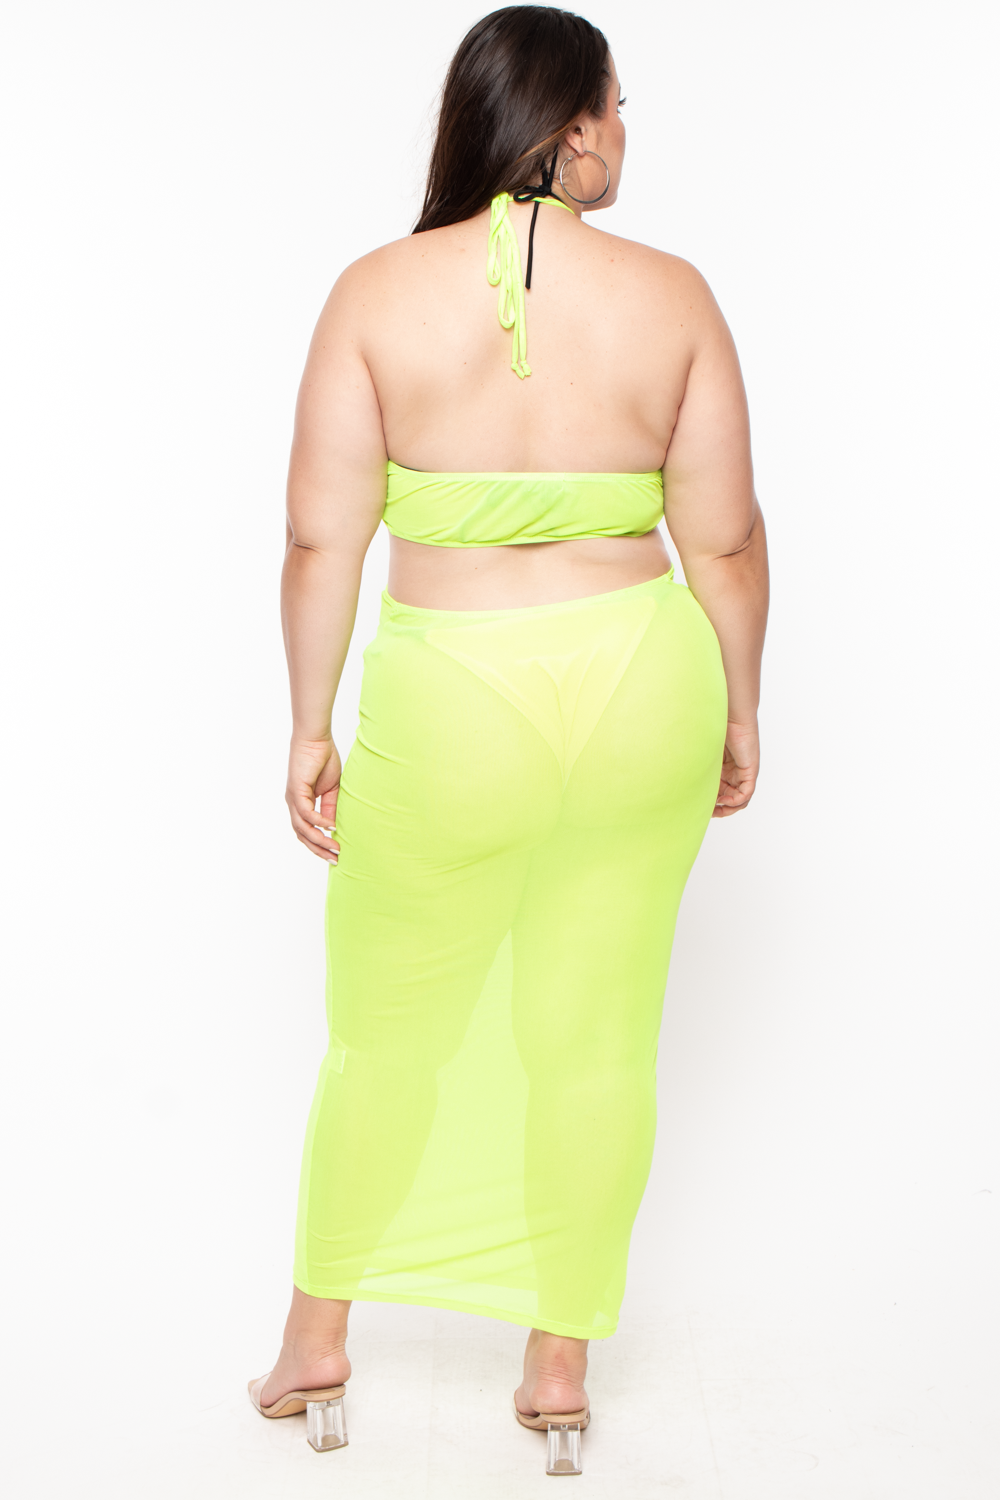 Highlight Swimwear Plus Size Halter Mesh Cover-Up Dress - Neon